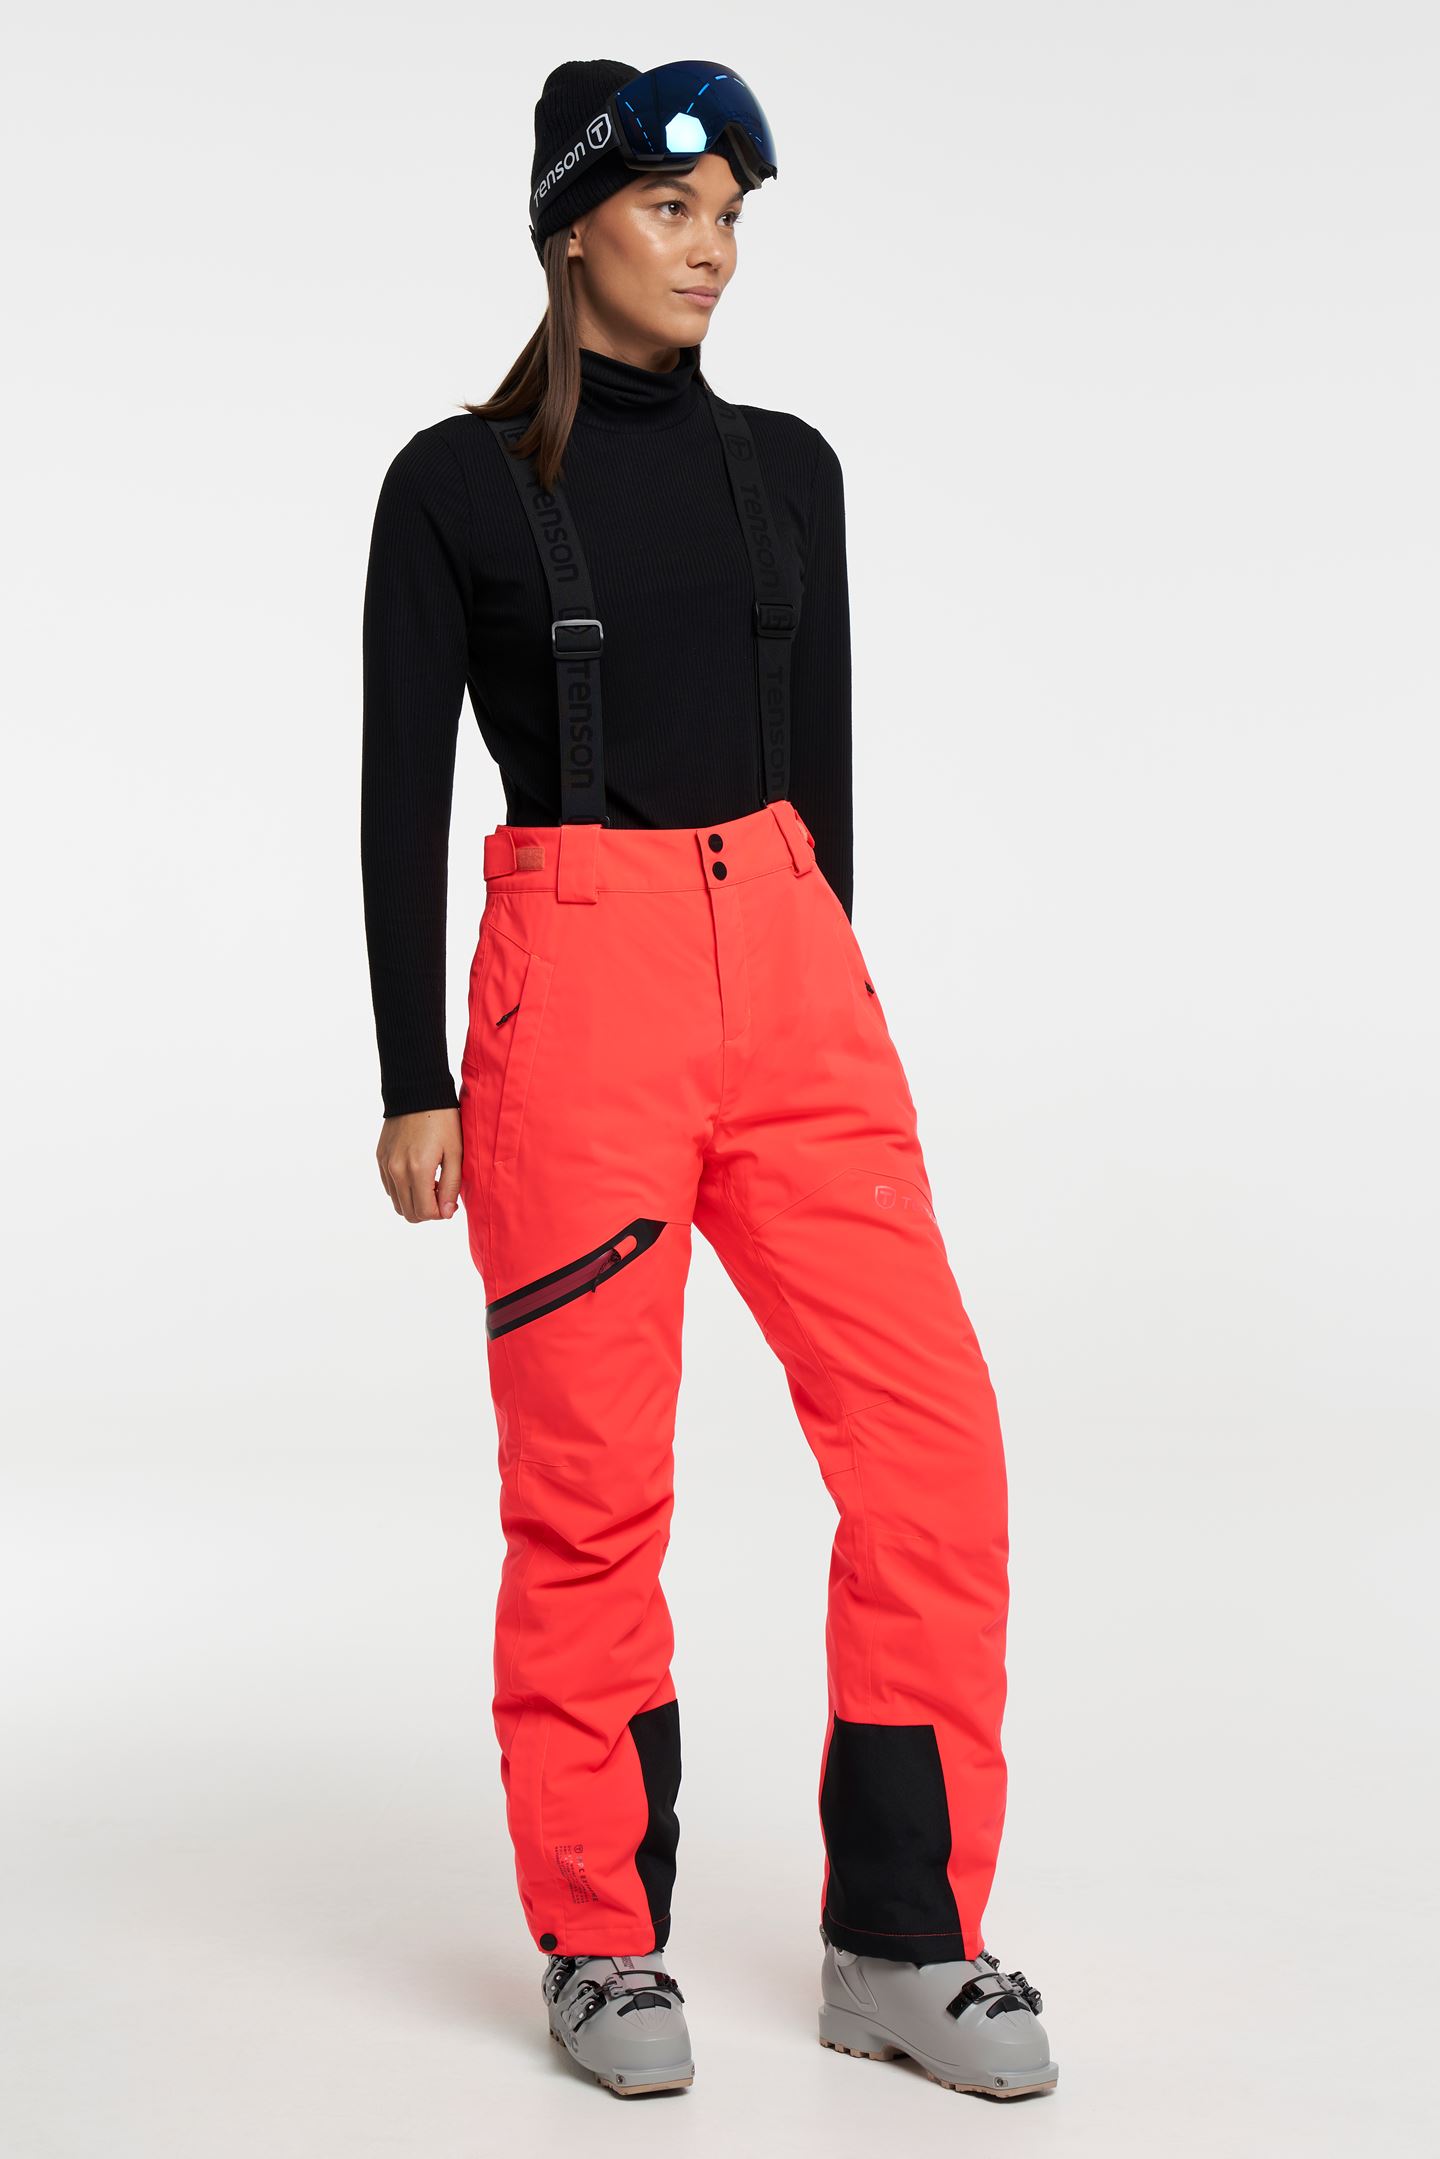 Damen mit abnehmbaren Ski - Core Pants für Trägern Coral Skihose -